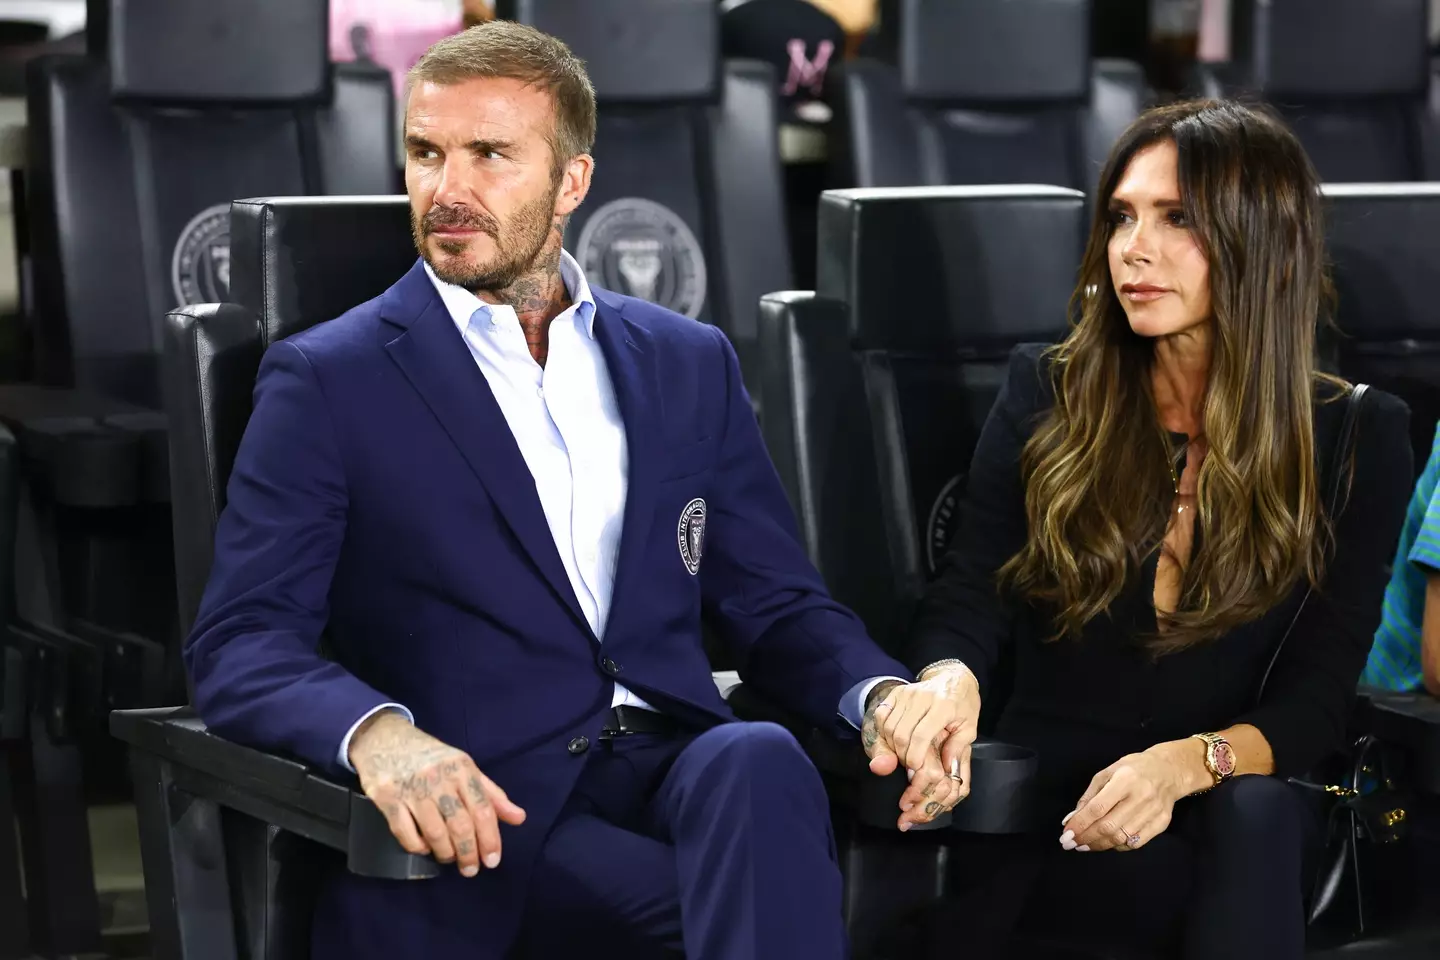 Both David and Victoria Beckham said that the alleged affair didn't happen.